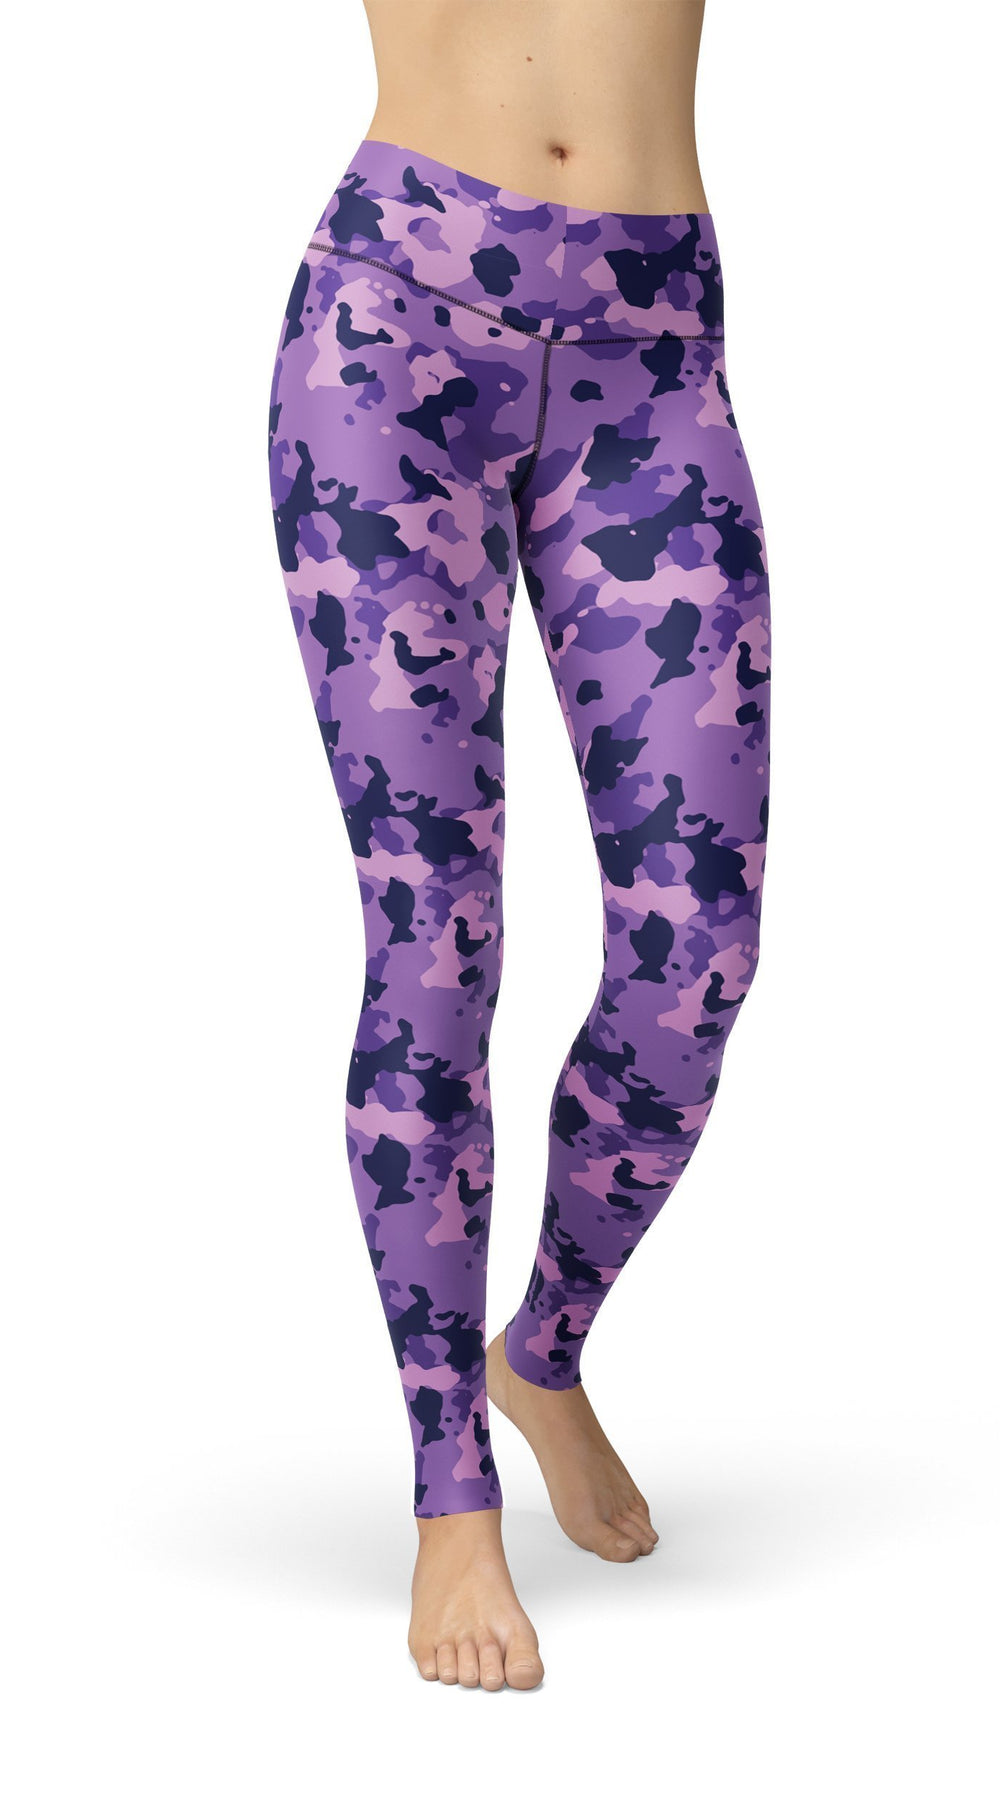 jean purple camouflage leggings